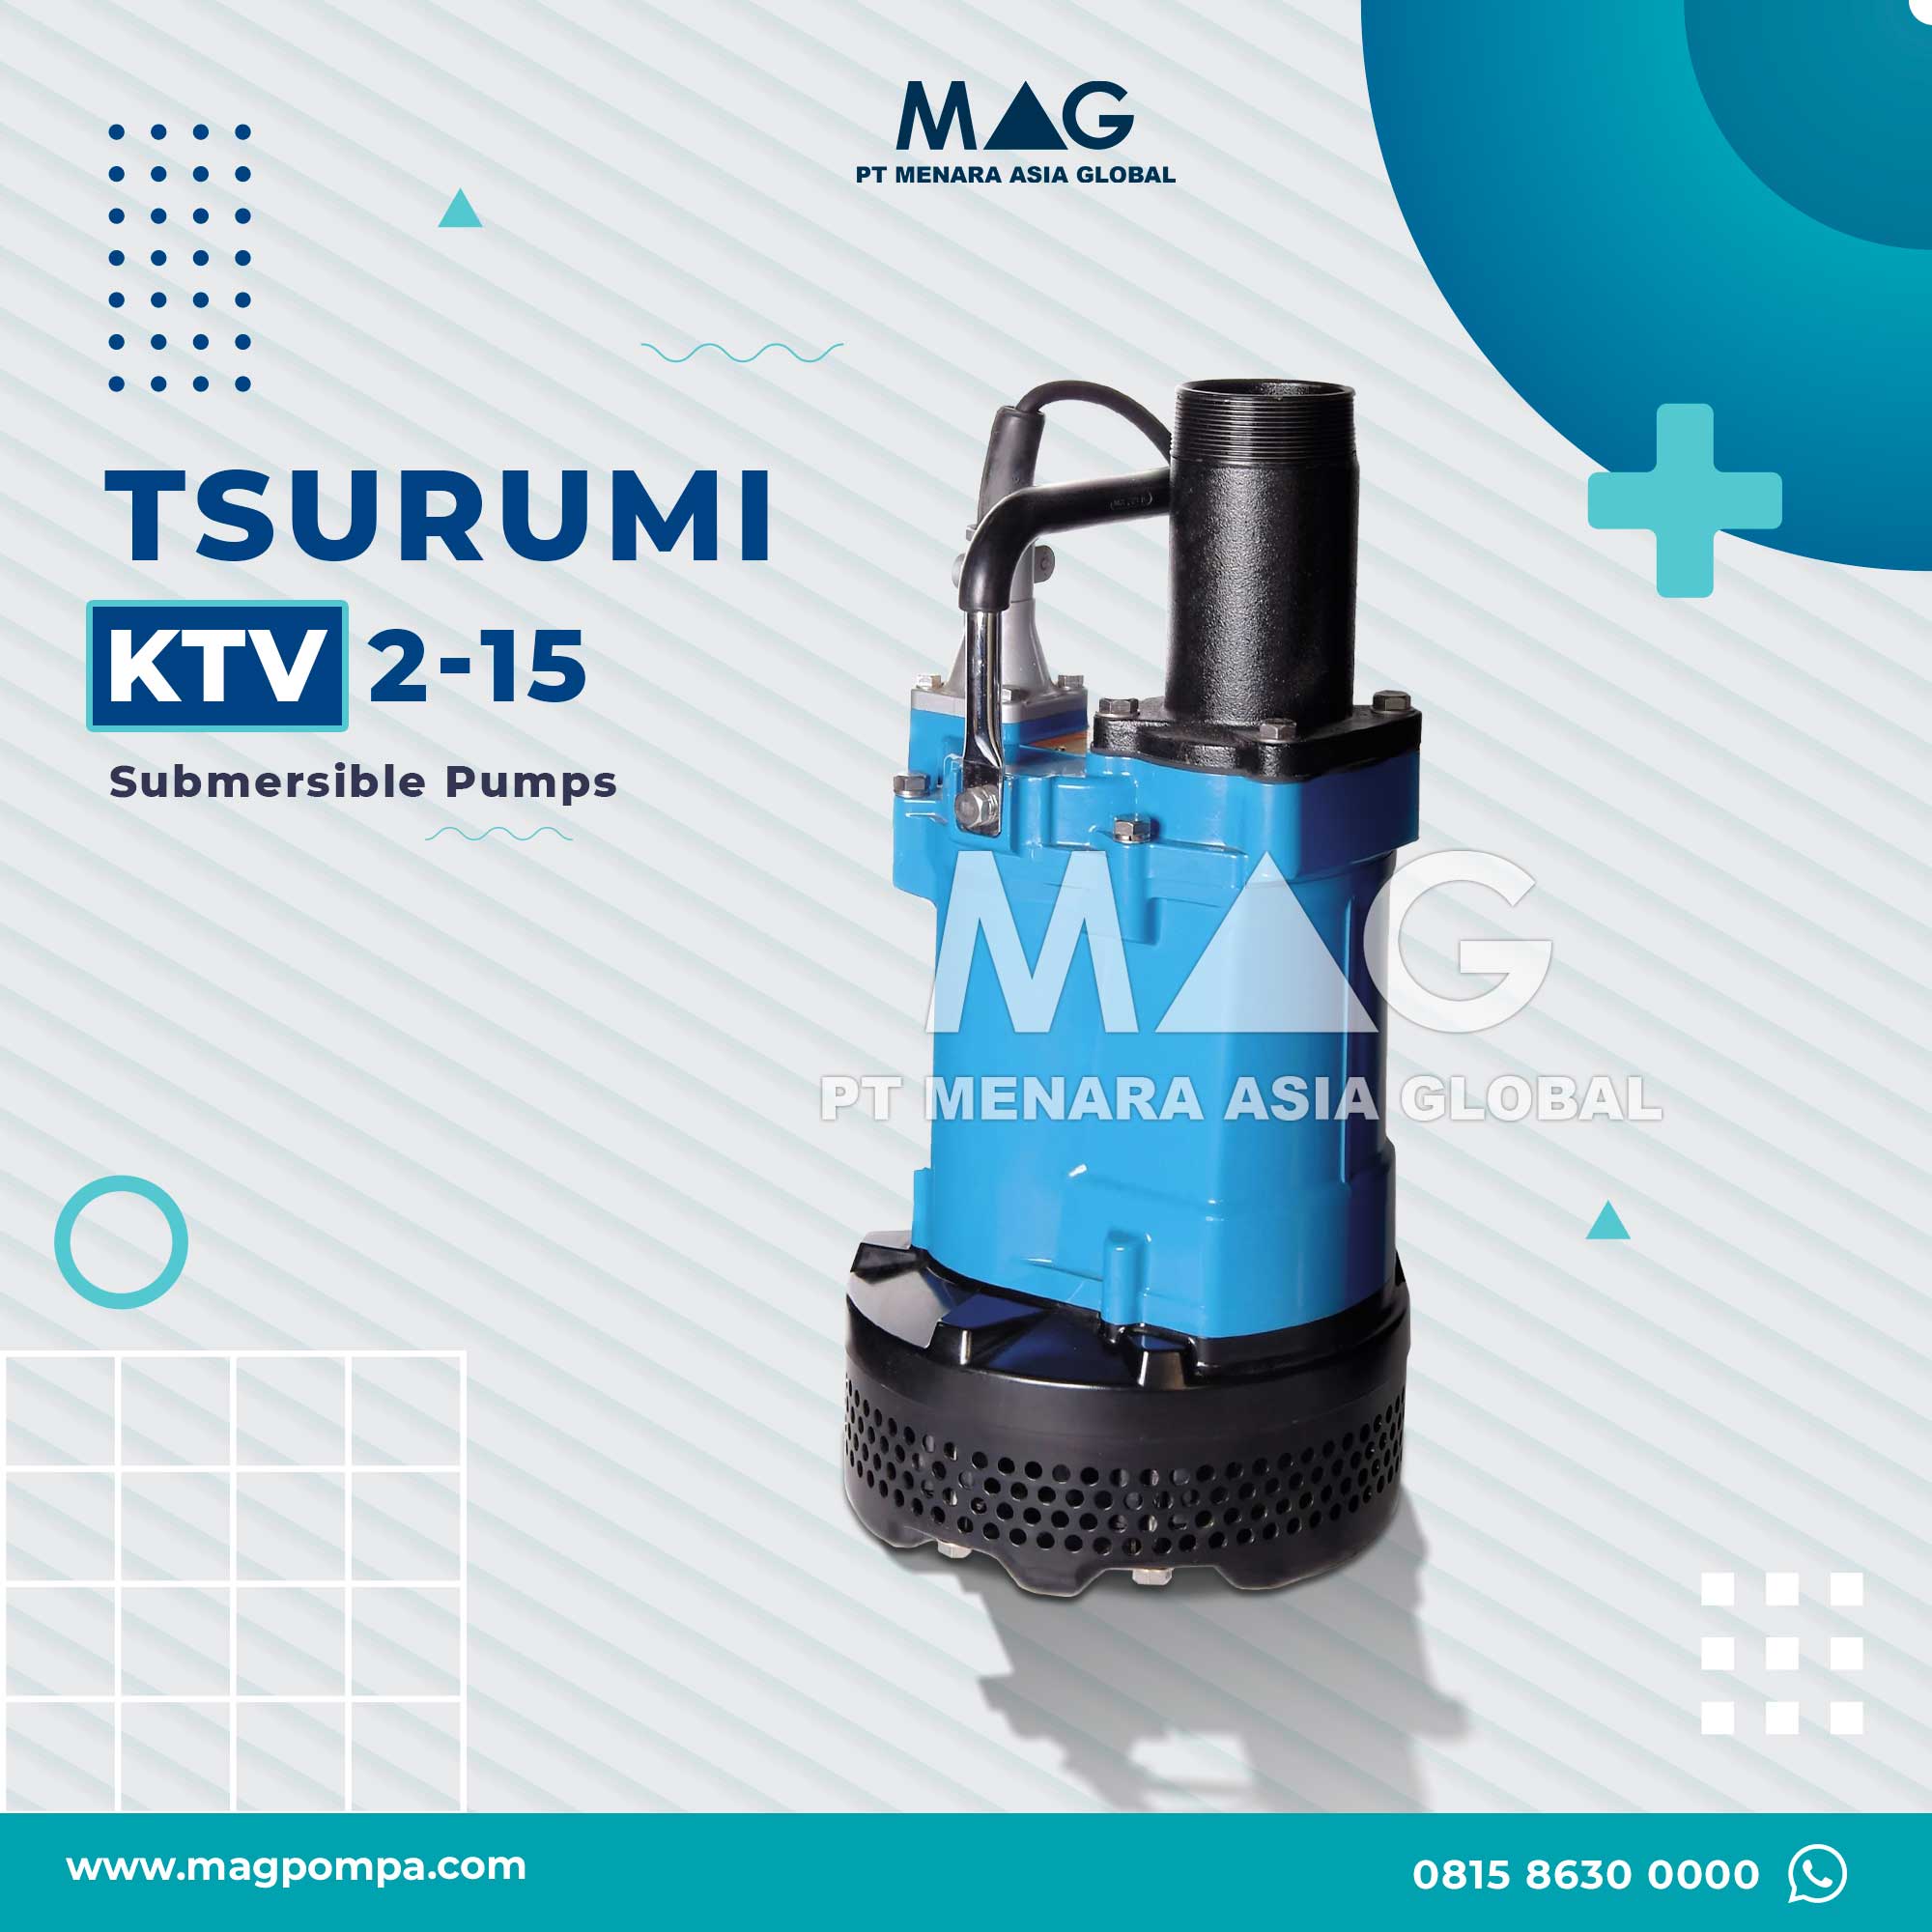 Tsurumi KTV 2-15 Pompa Submersible Air Kotor